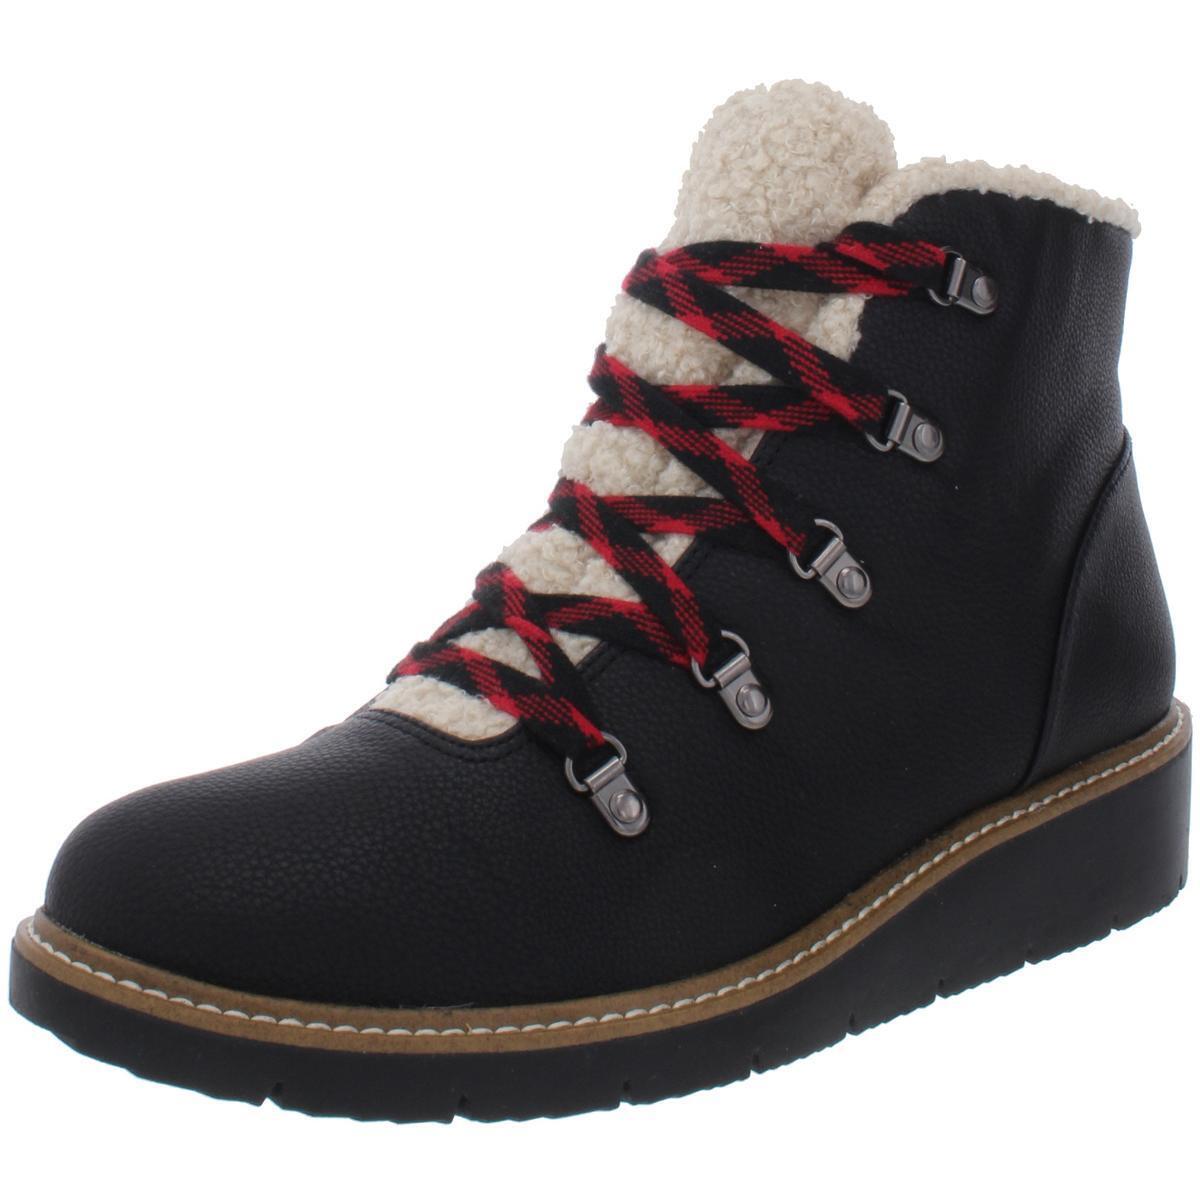 Cozy Black Winter Boots